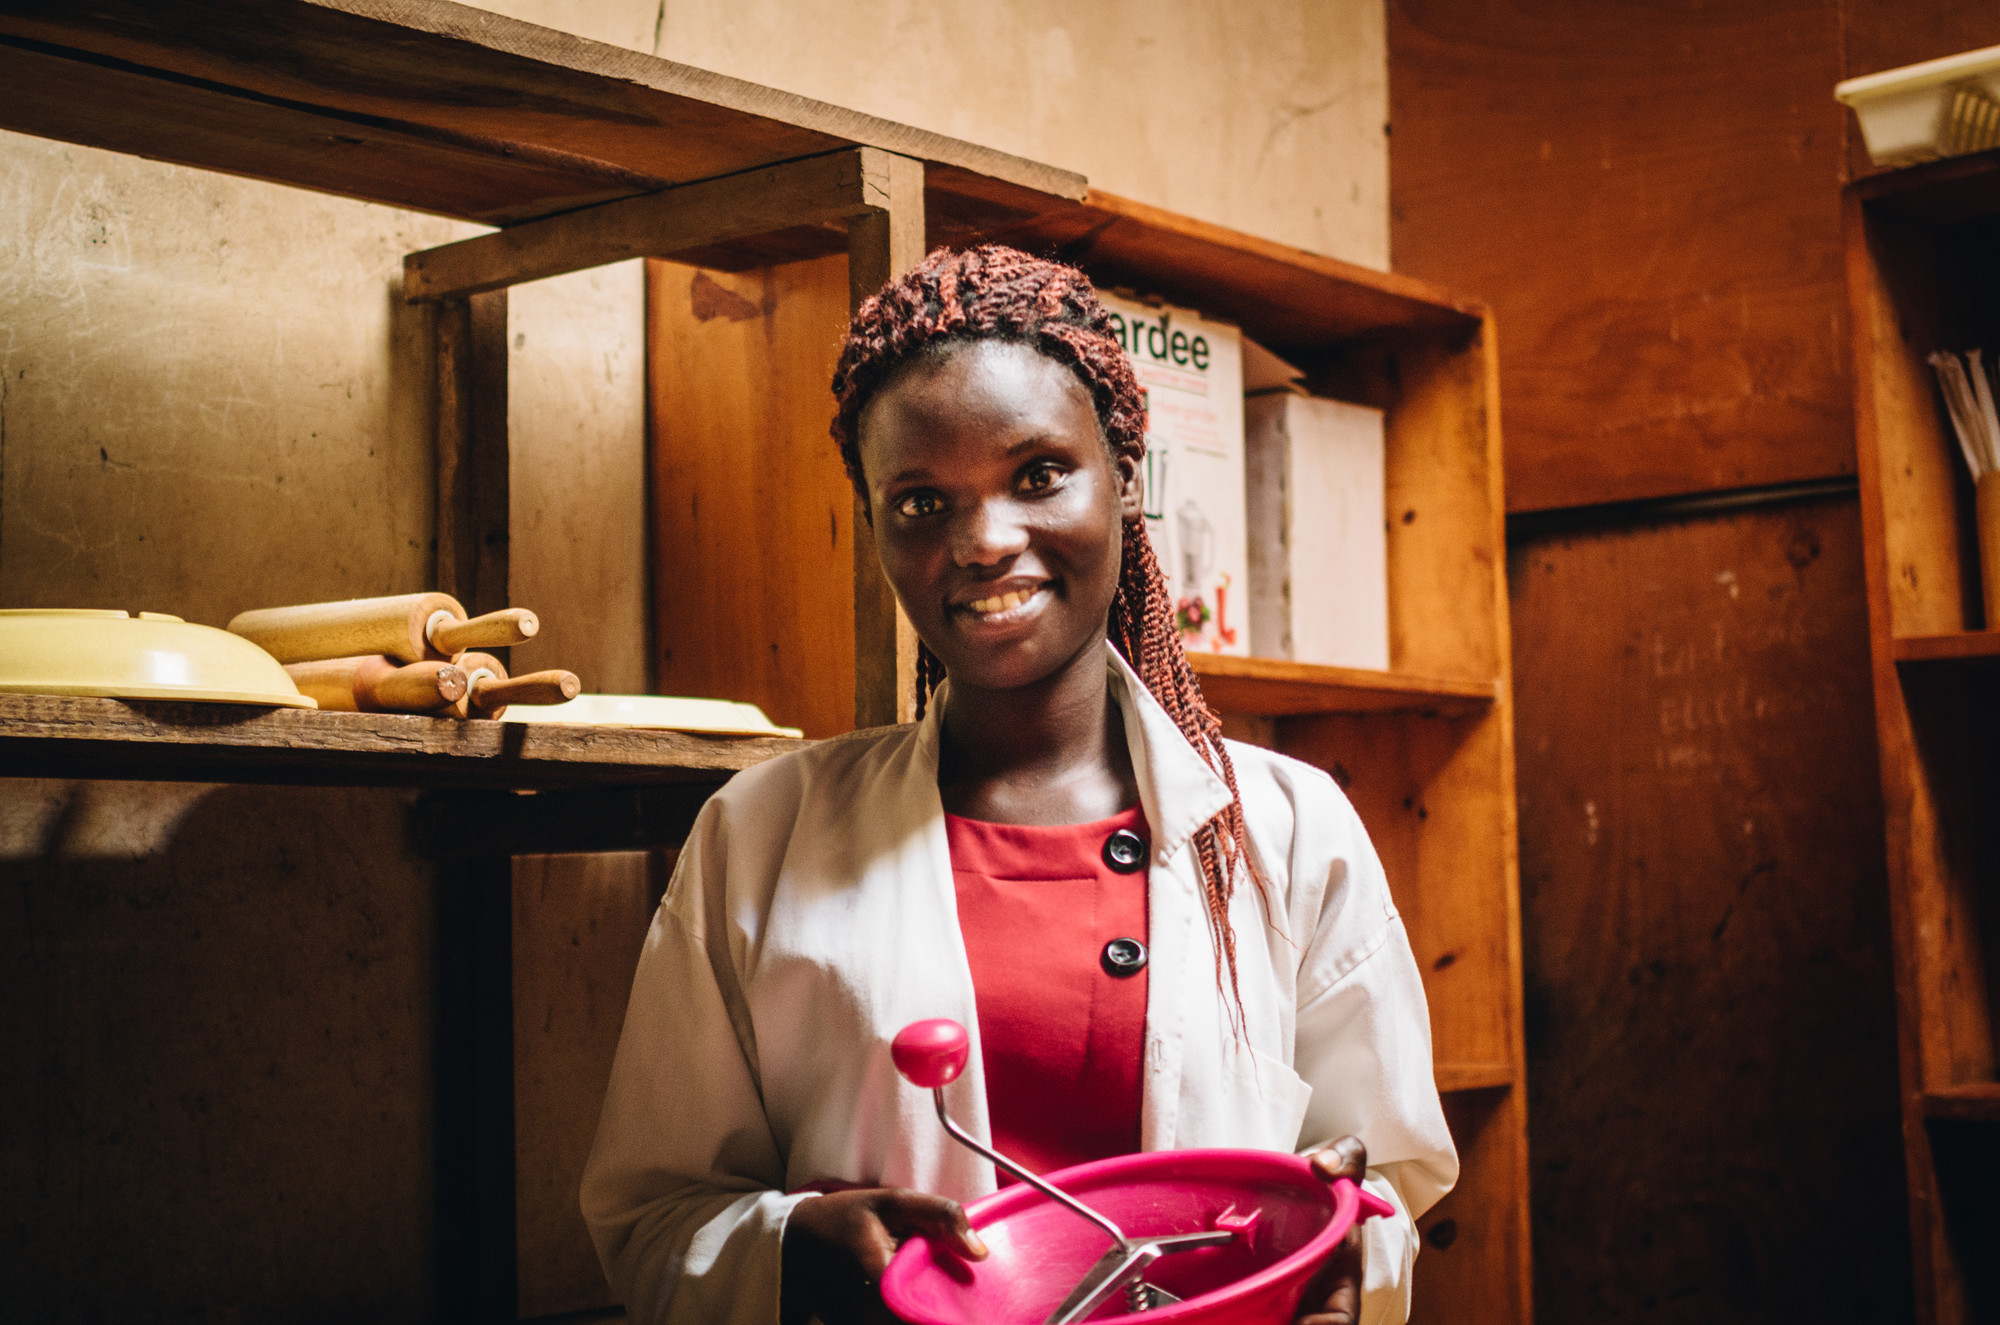 A Rwandan woman holding a pink bowl